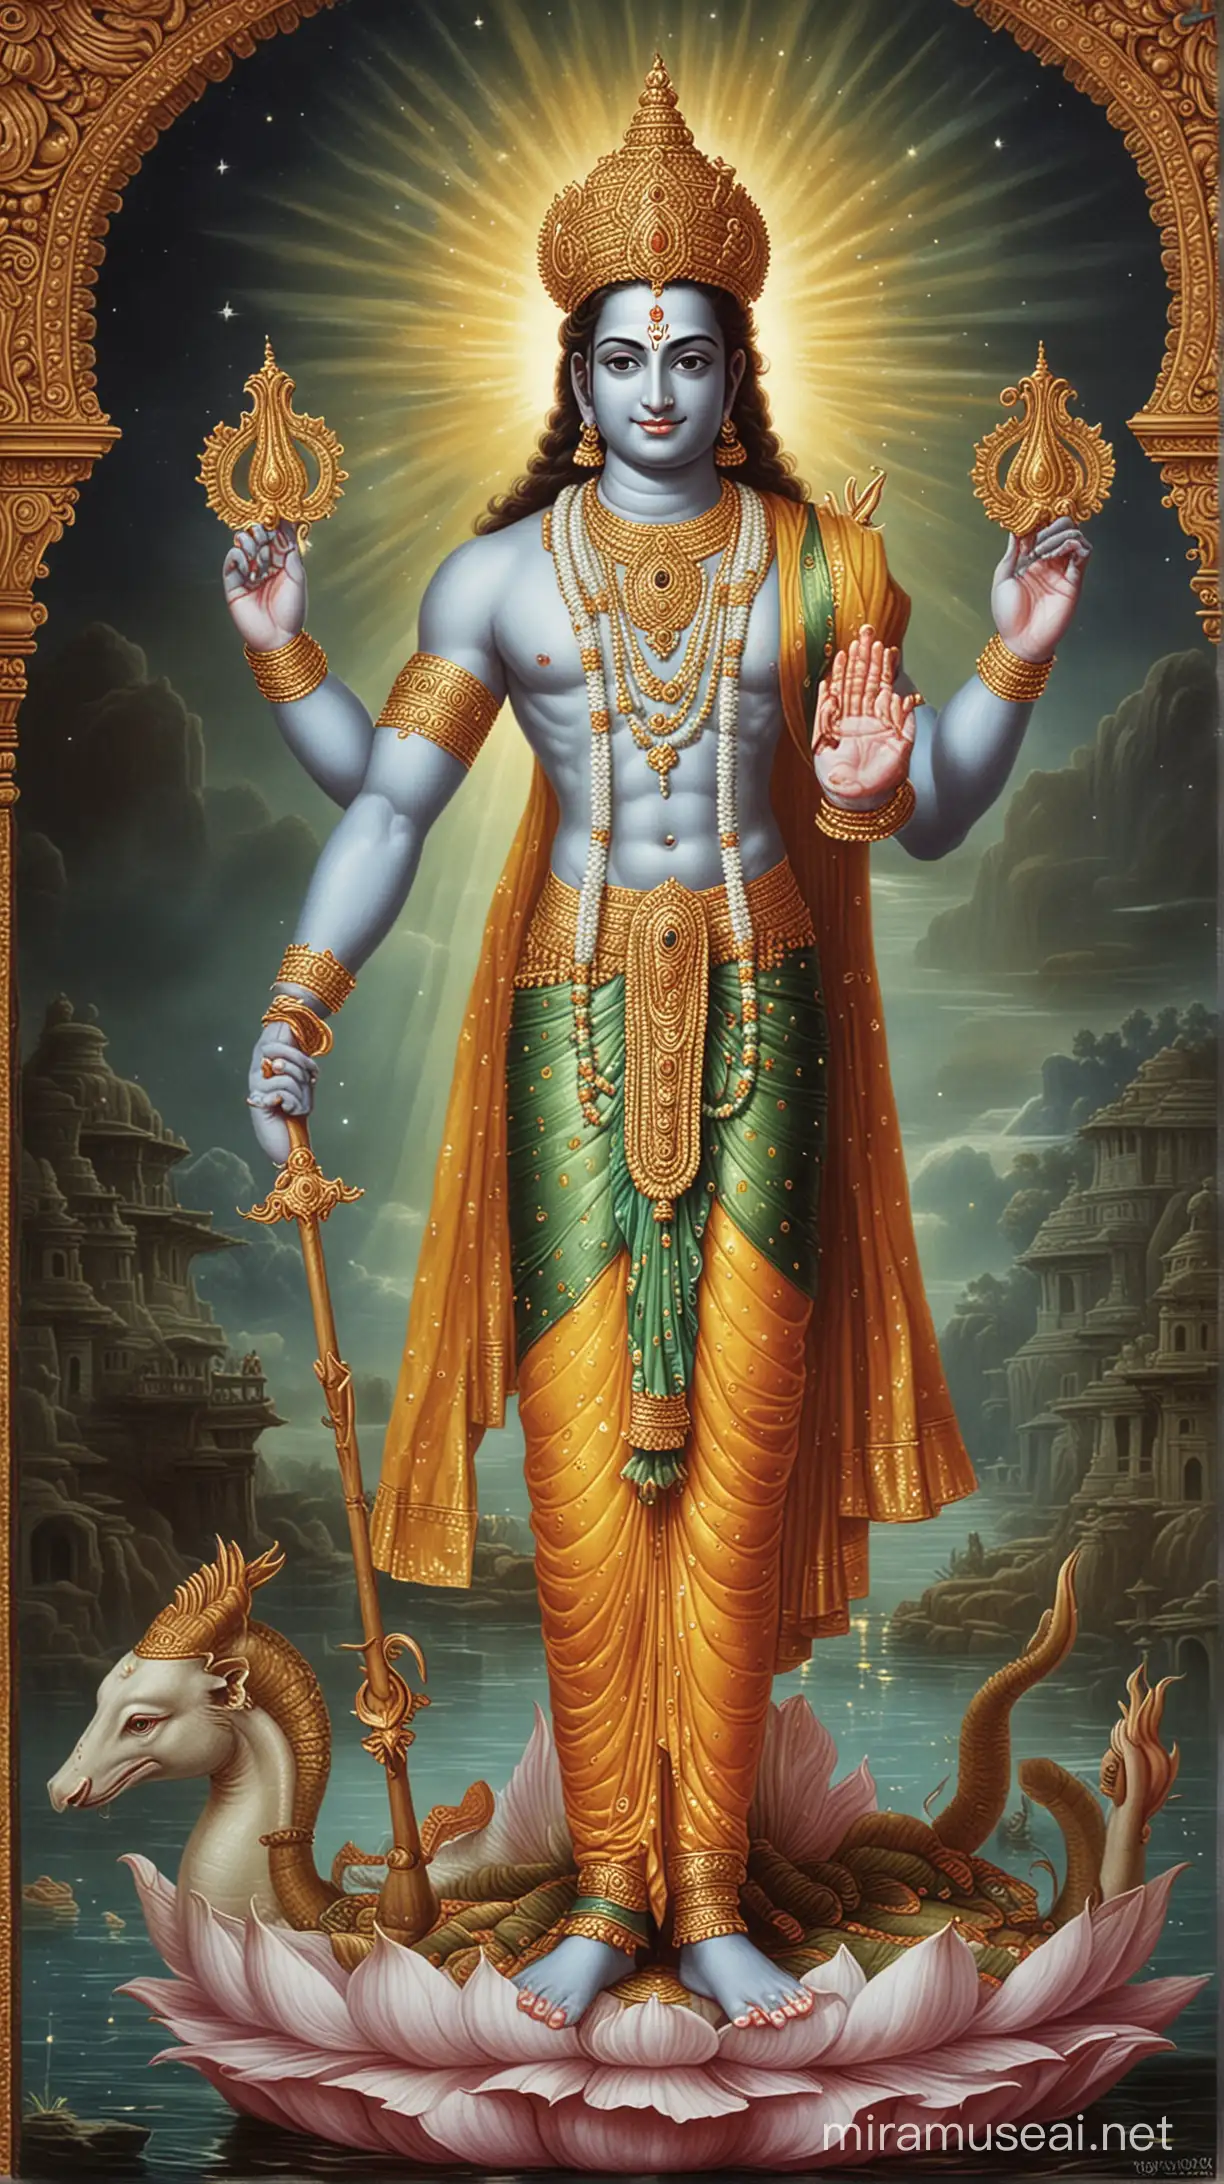 Divine Lord Vishnu Protecting the Universe with Sudarshana Chakra